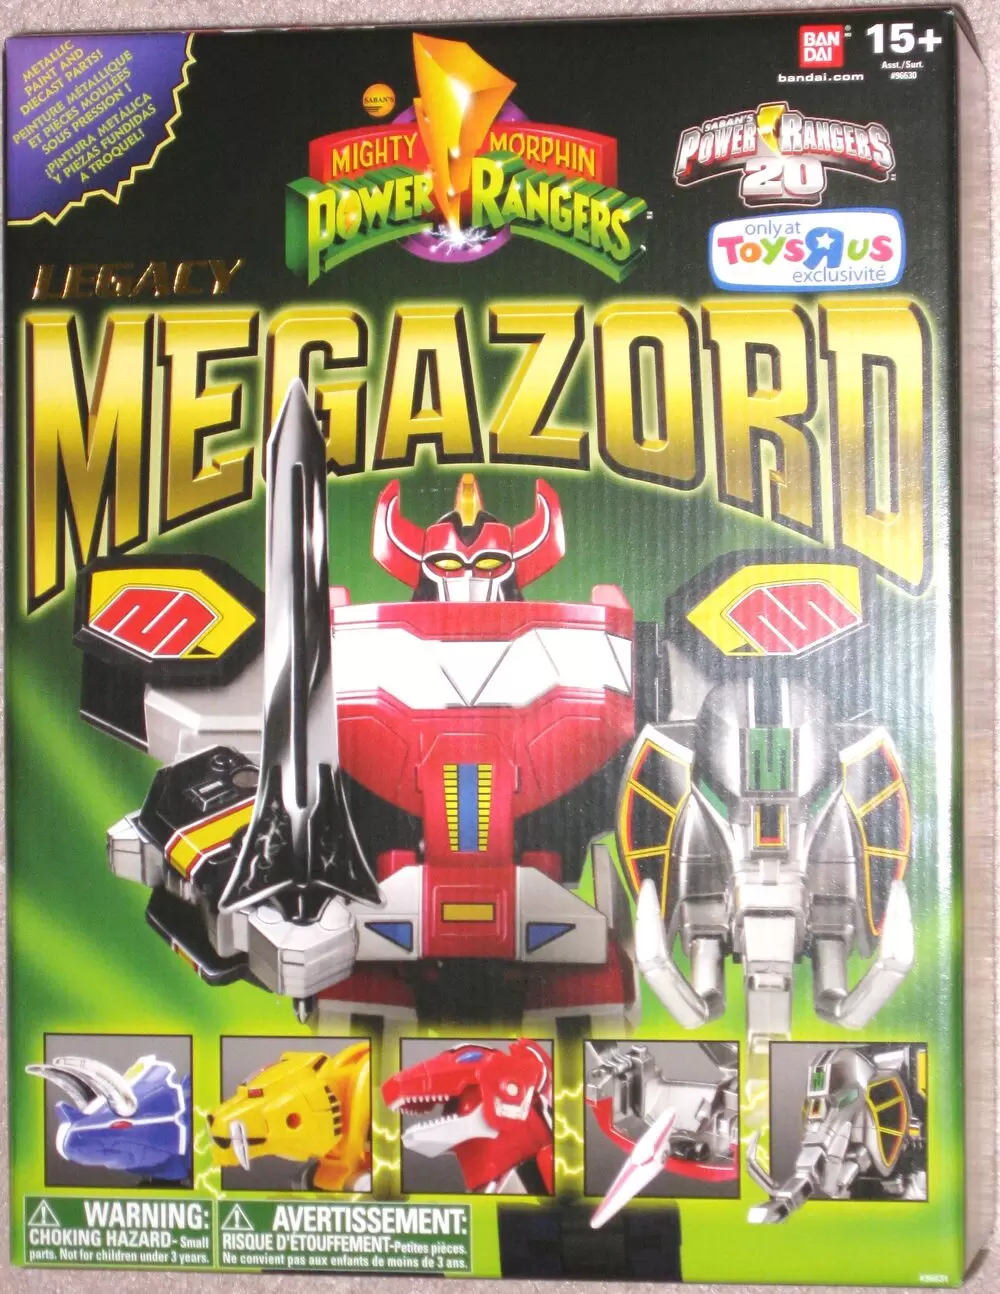 Legacy Power Rangers Bandai MegaZord - MegaZord